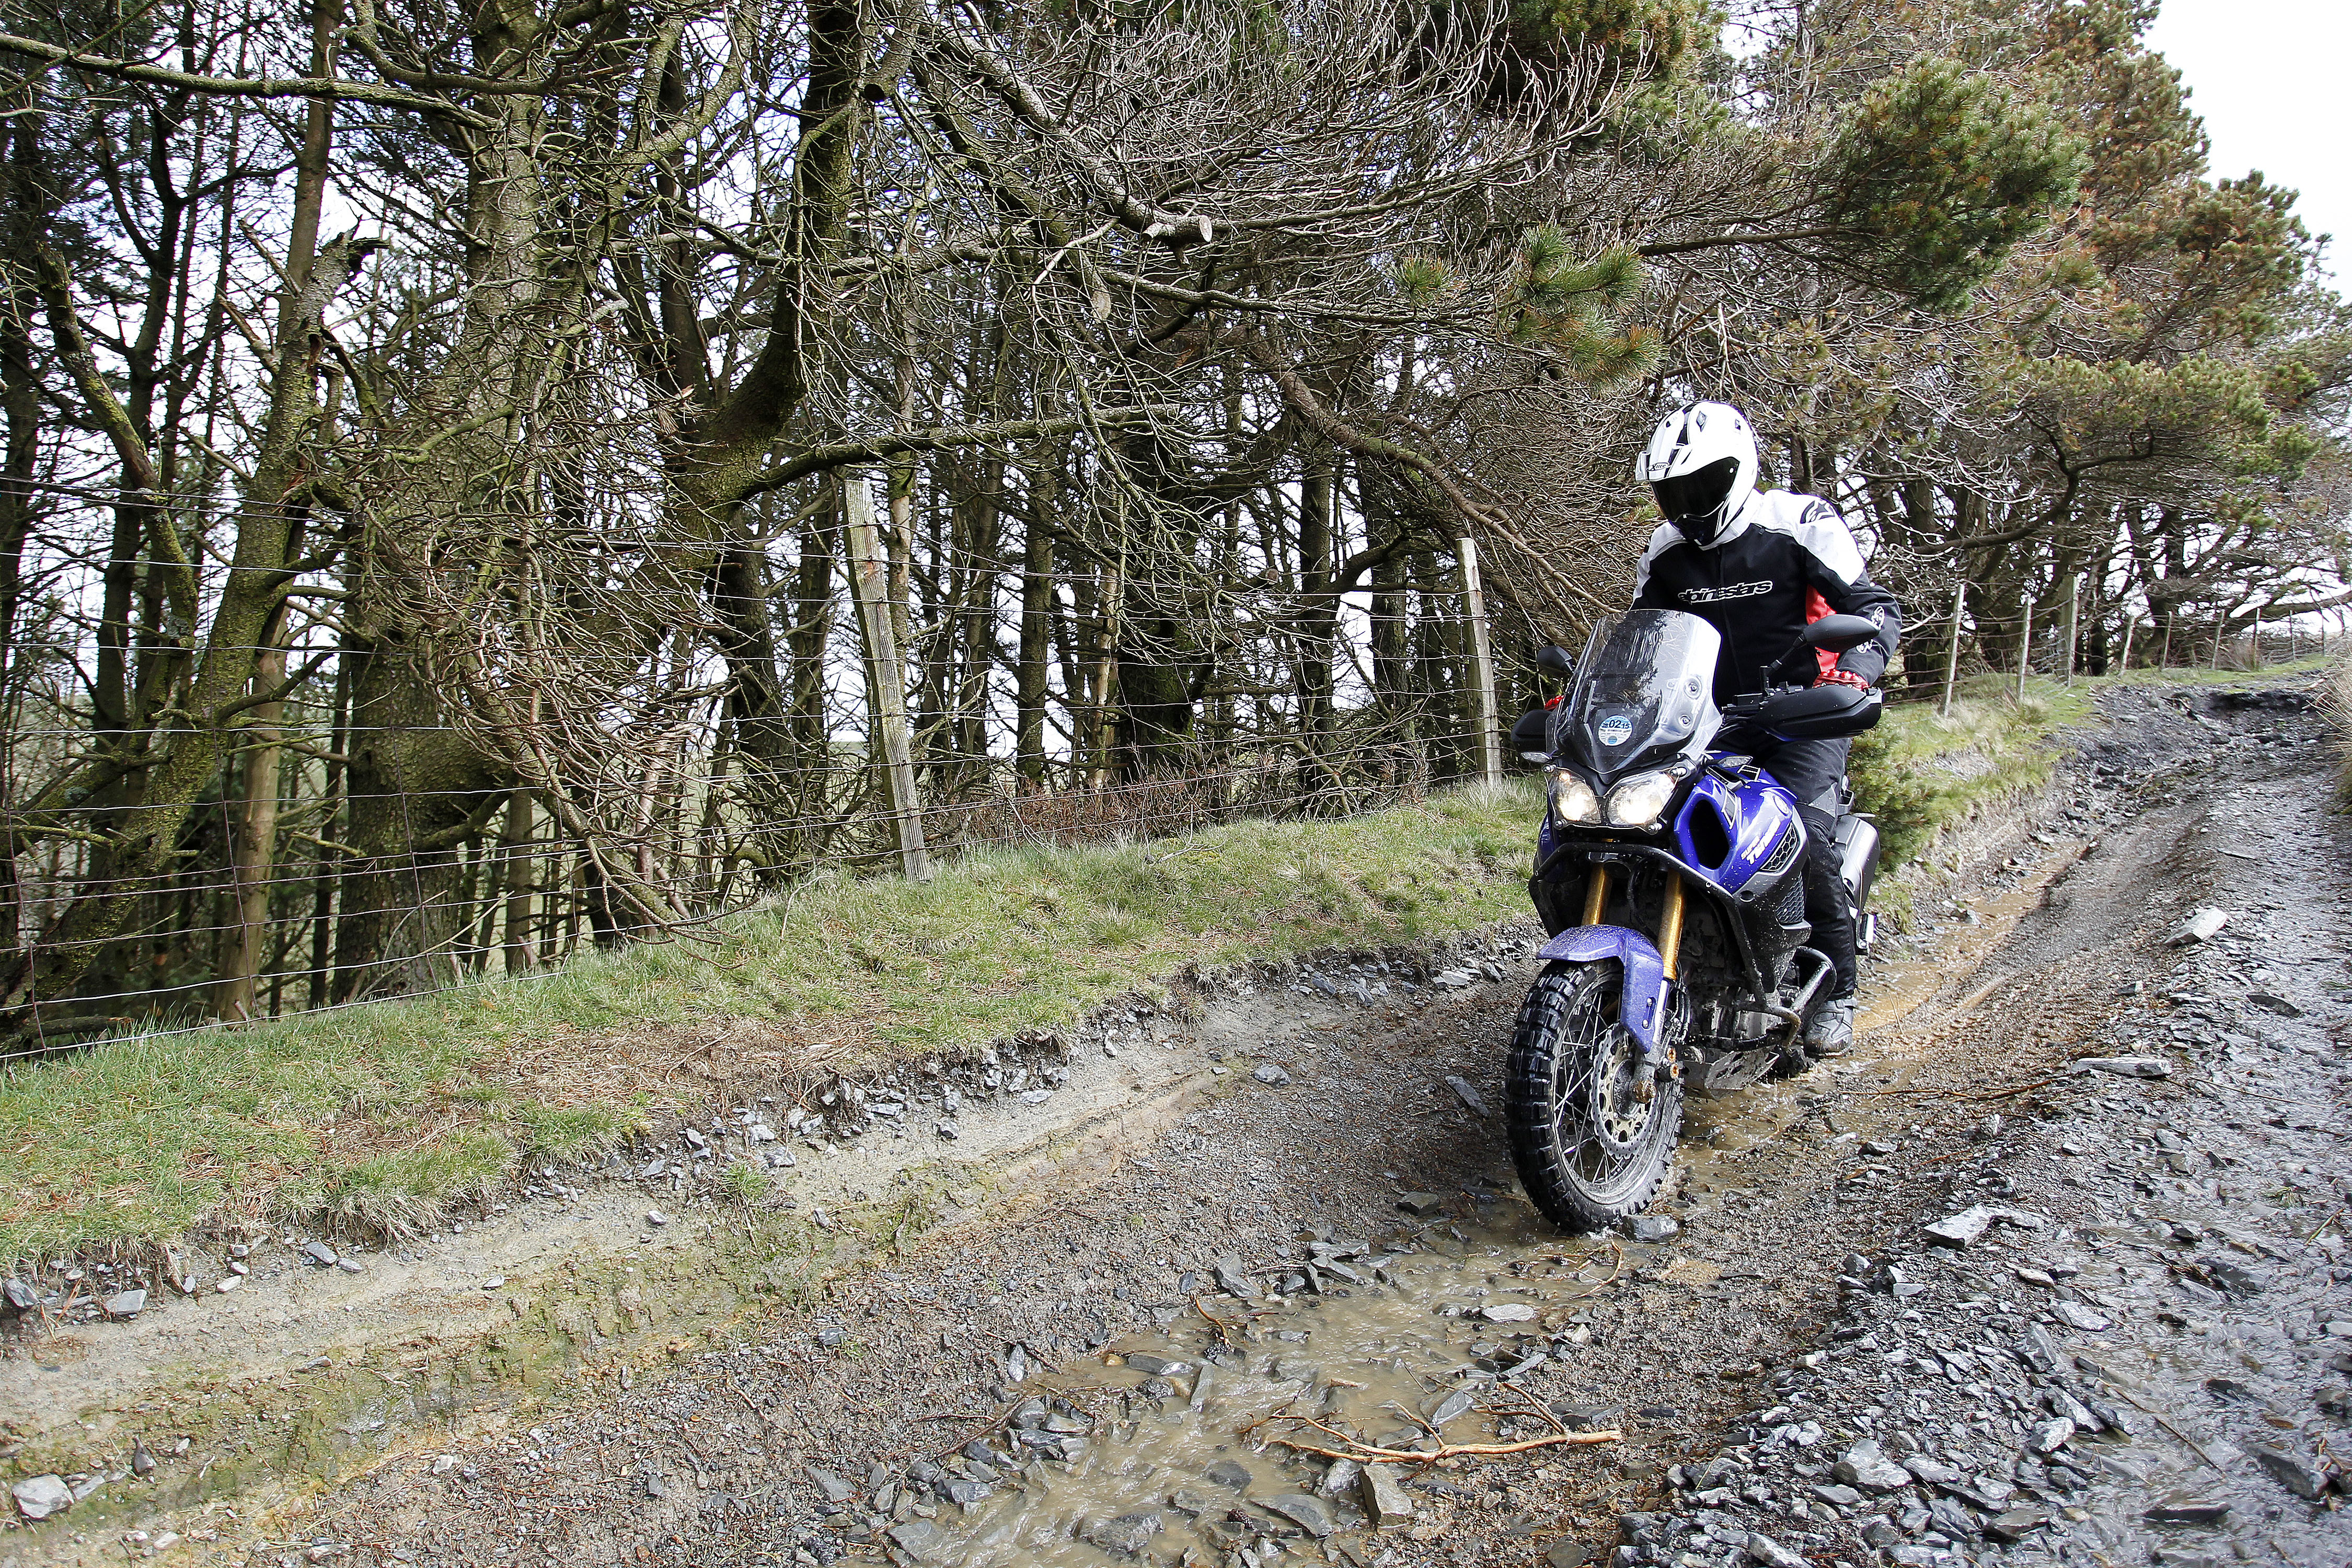 Review: off-roading on the 2014 Yamaha Super Ténéré